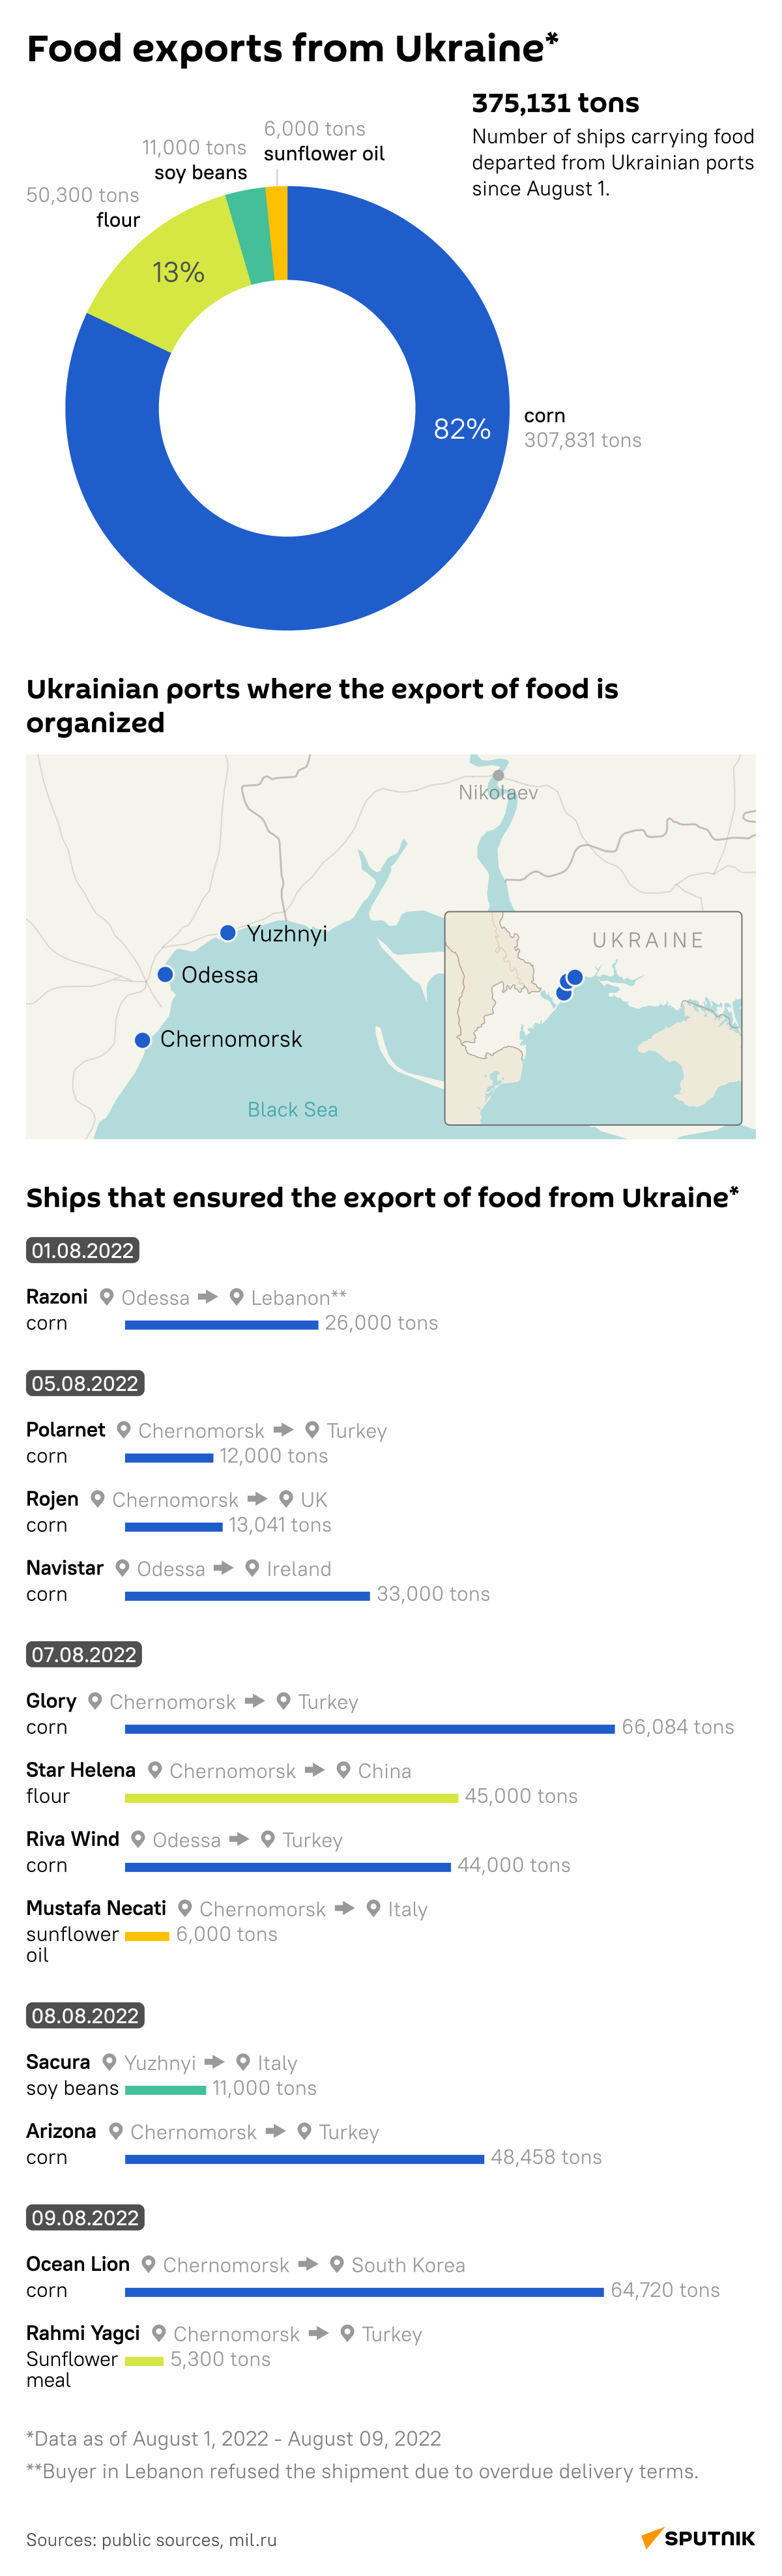 Food exports from Ukraine infographic - Sputnik International